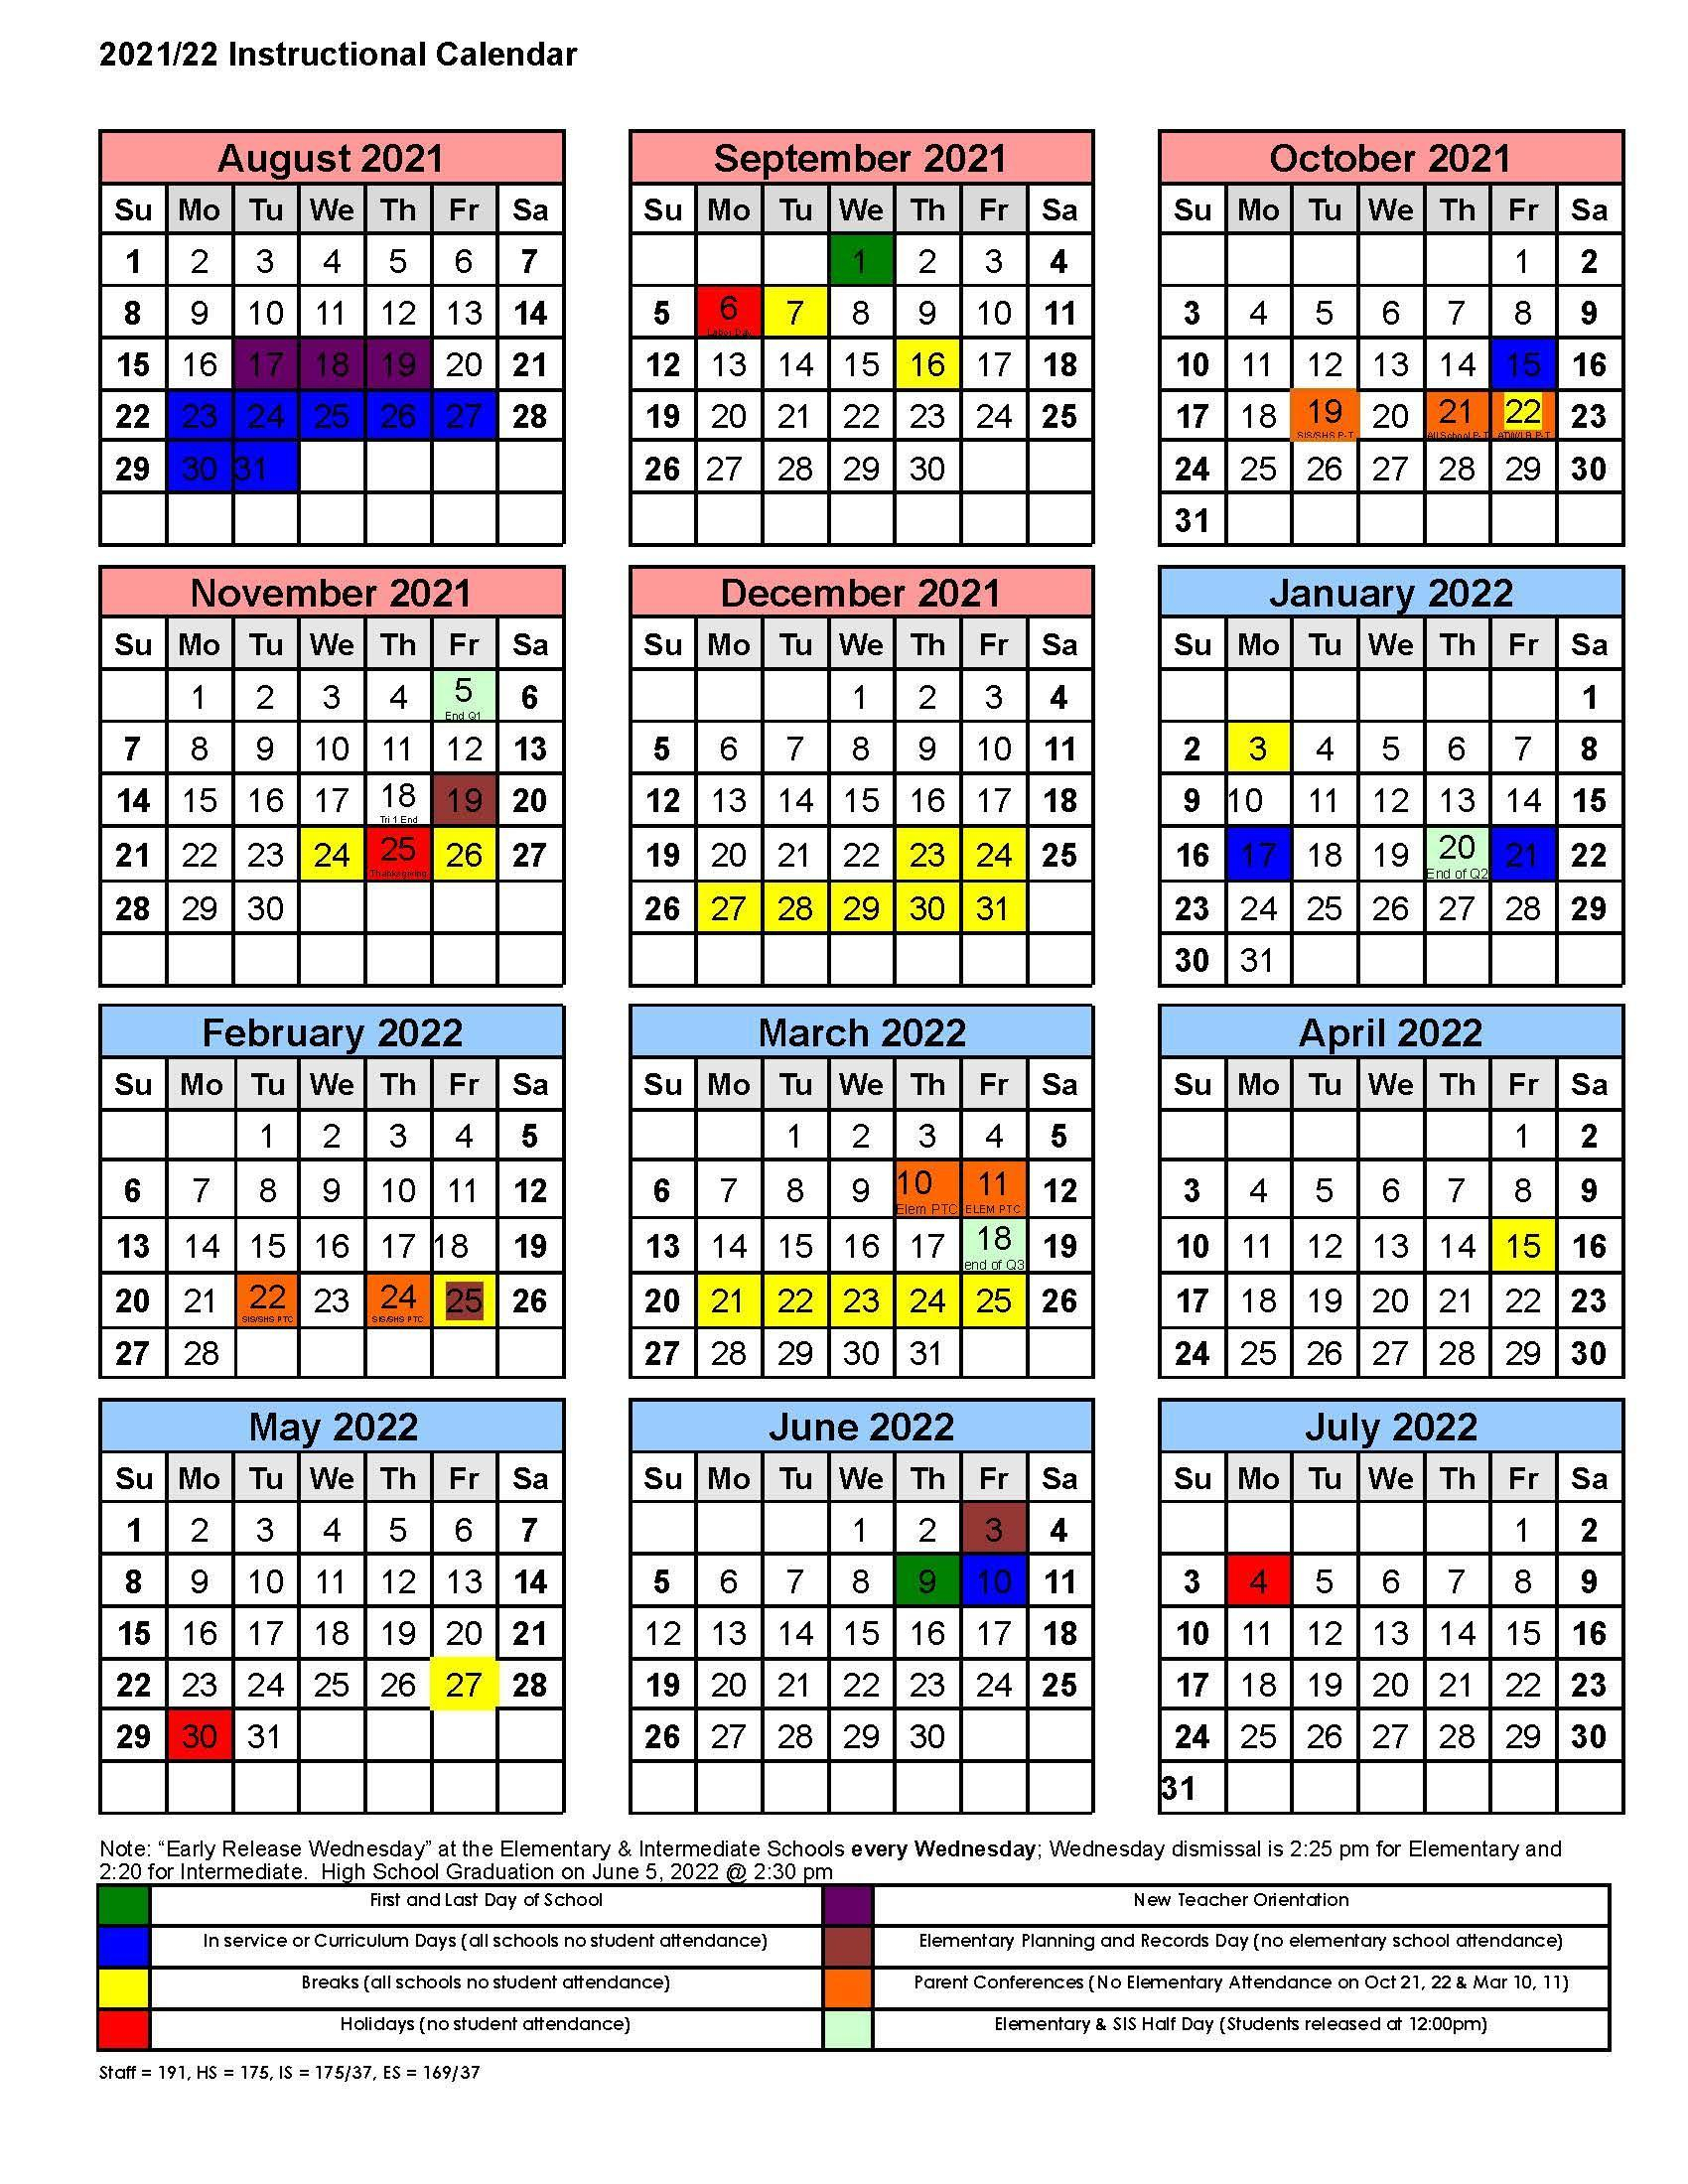 Williamsport School District Calendar 2022